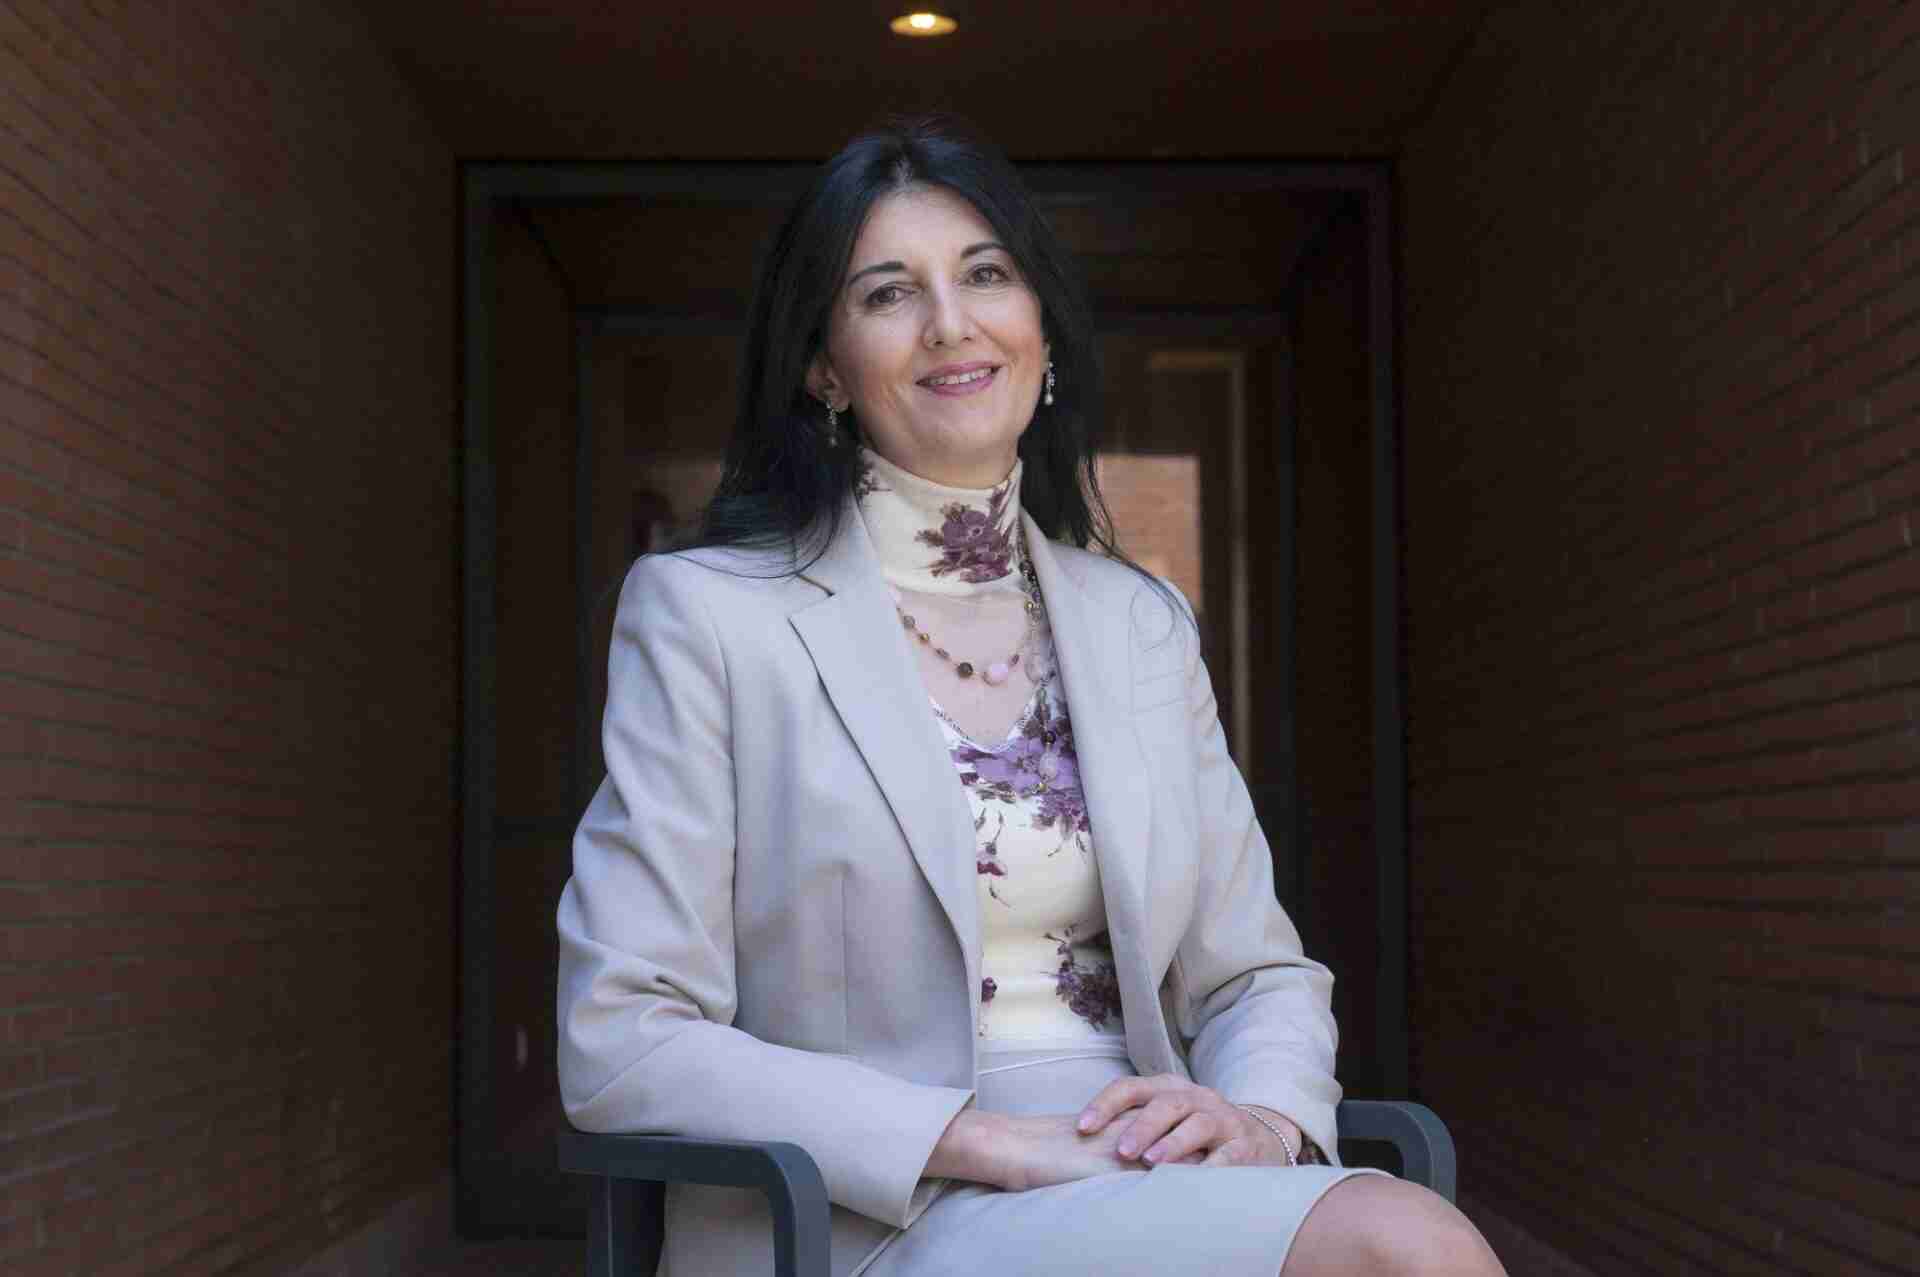 Chiara Mio is the new Chair of Aquafil S.p.A.